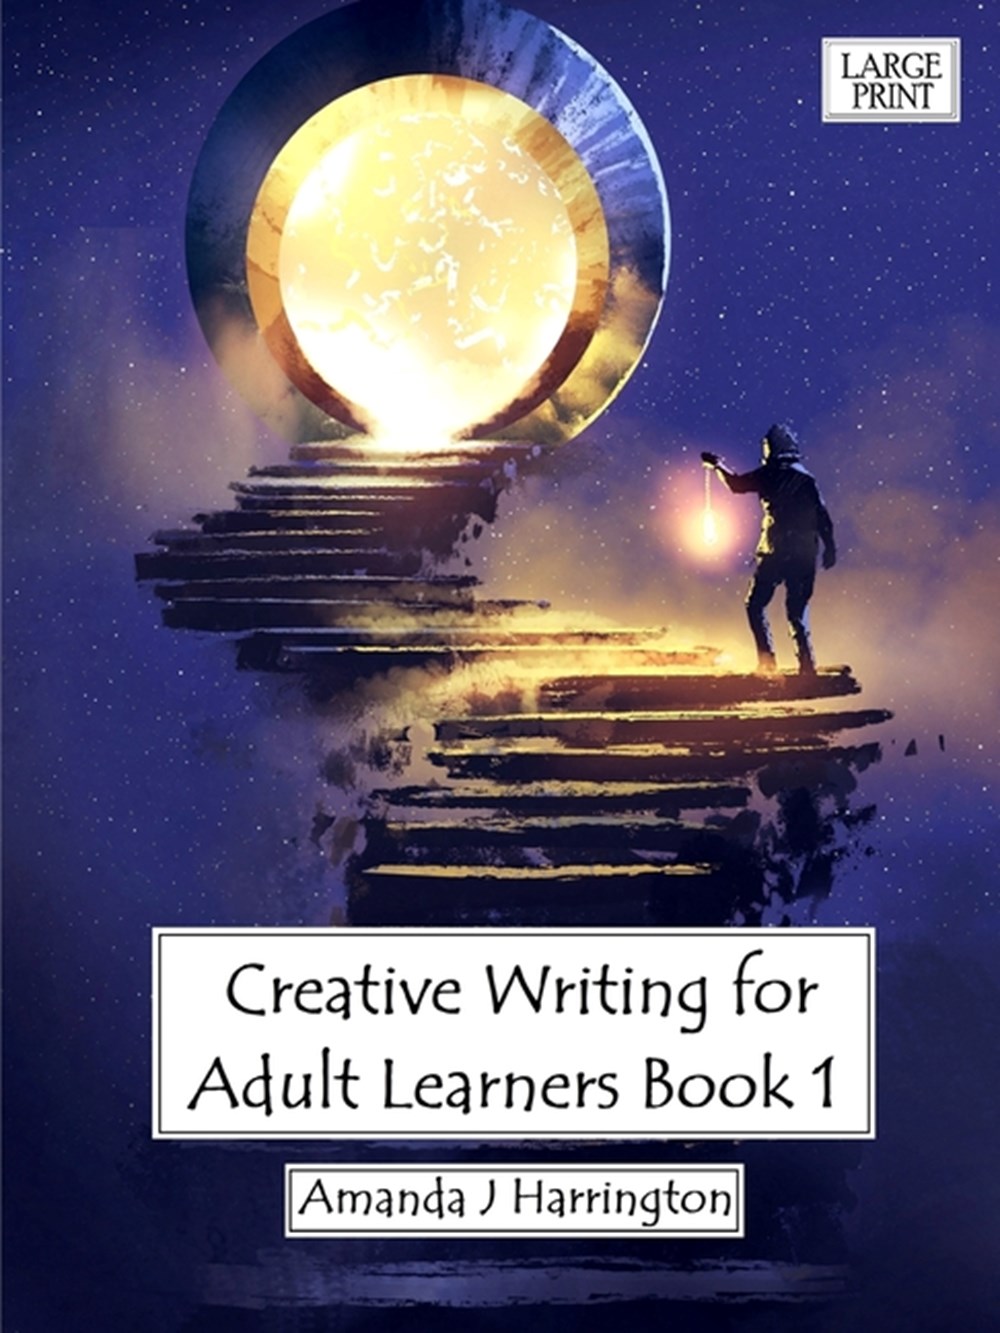 creative writing on book